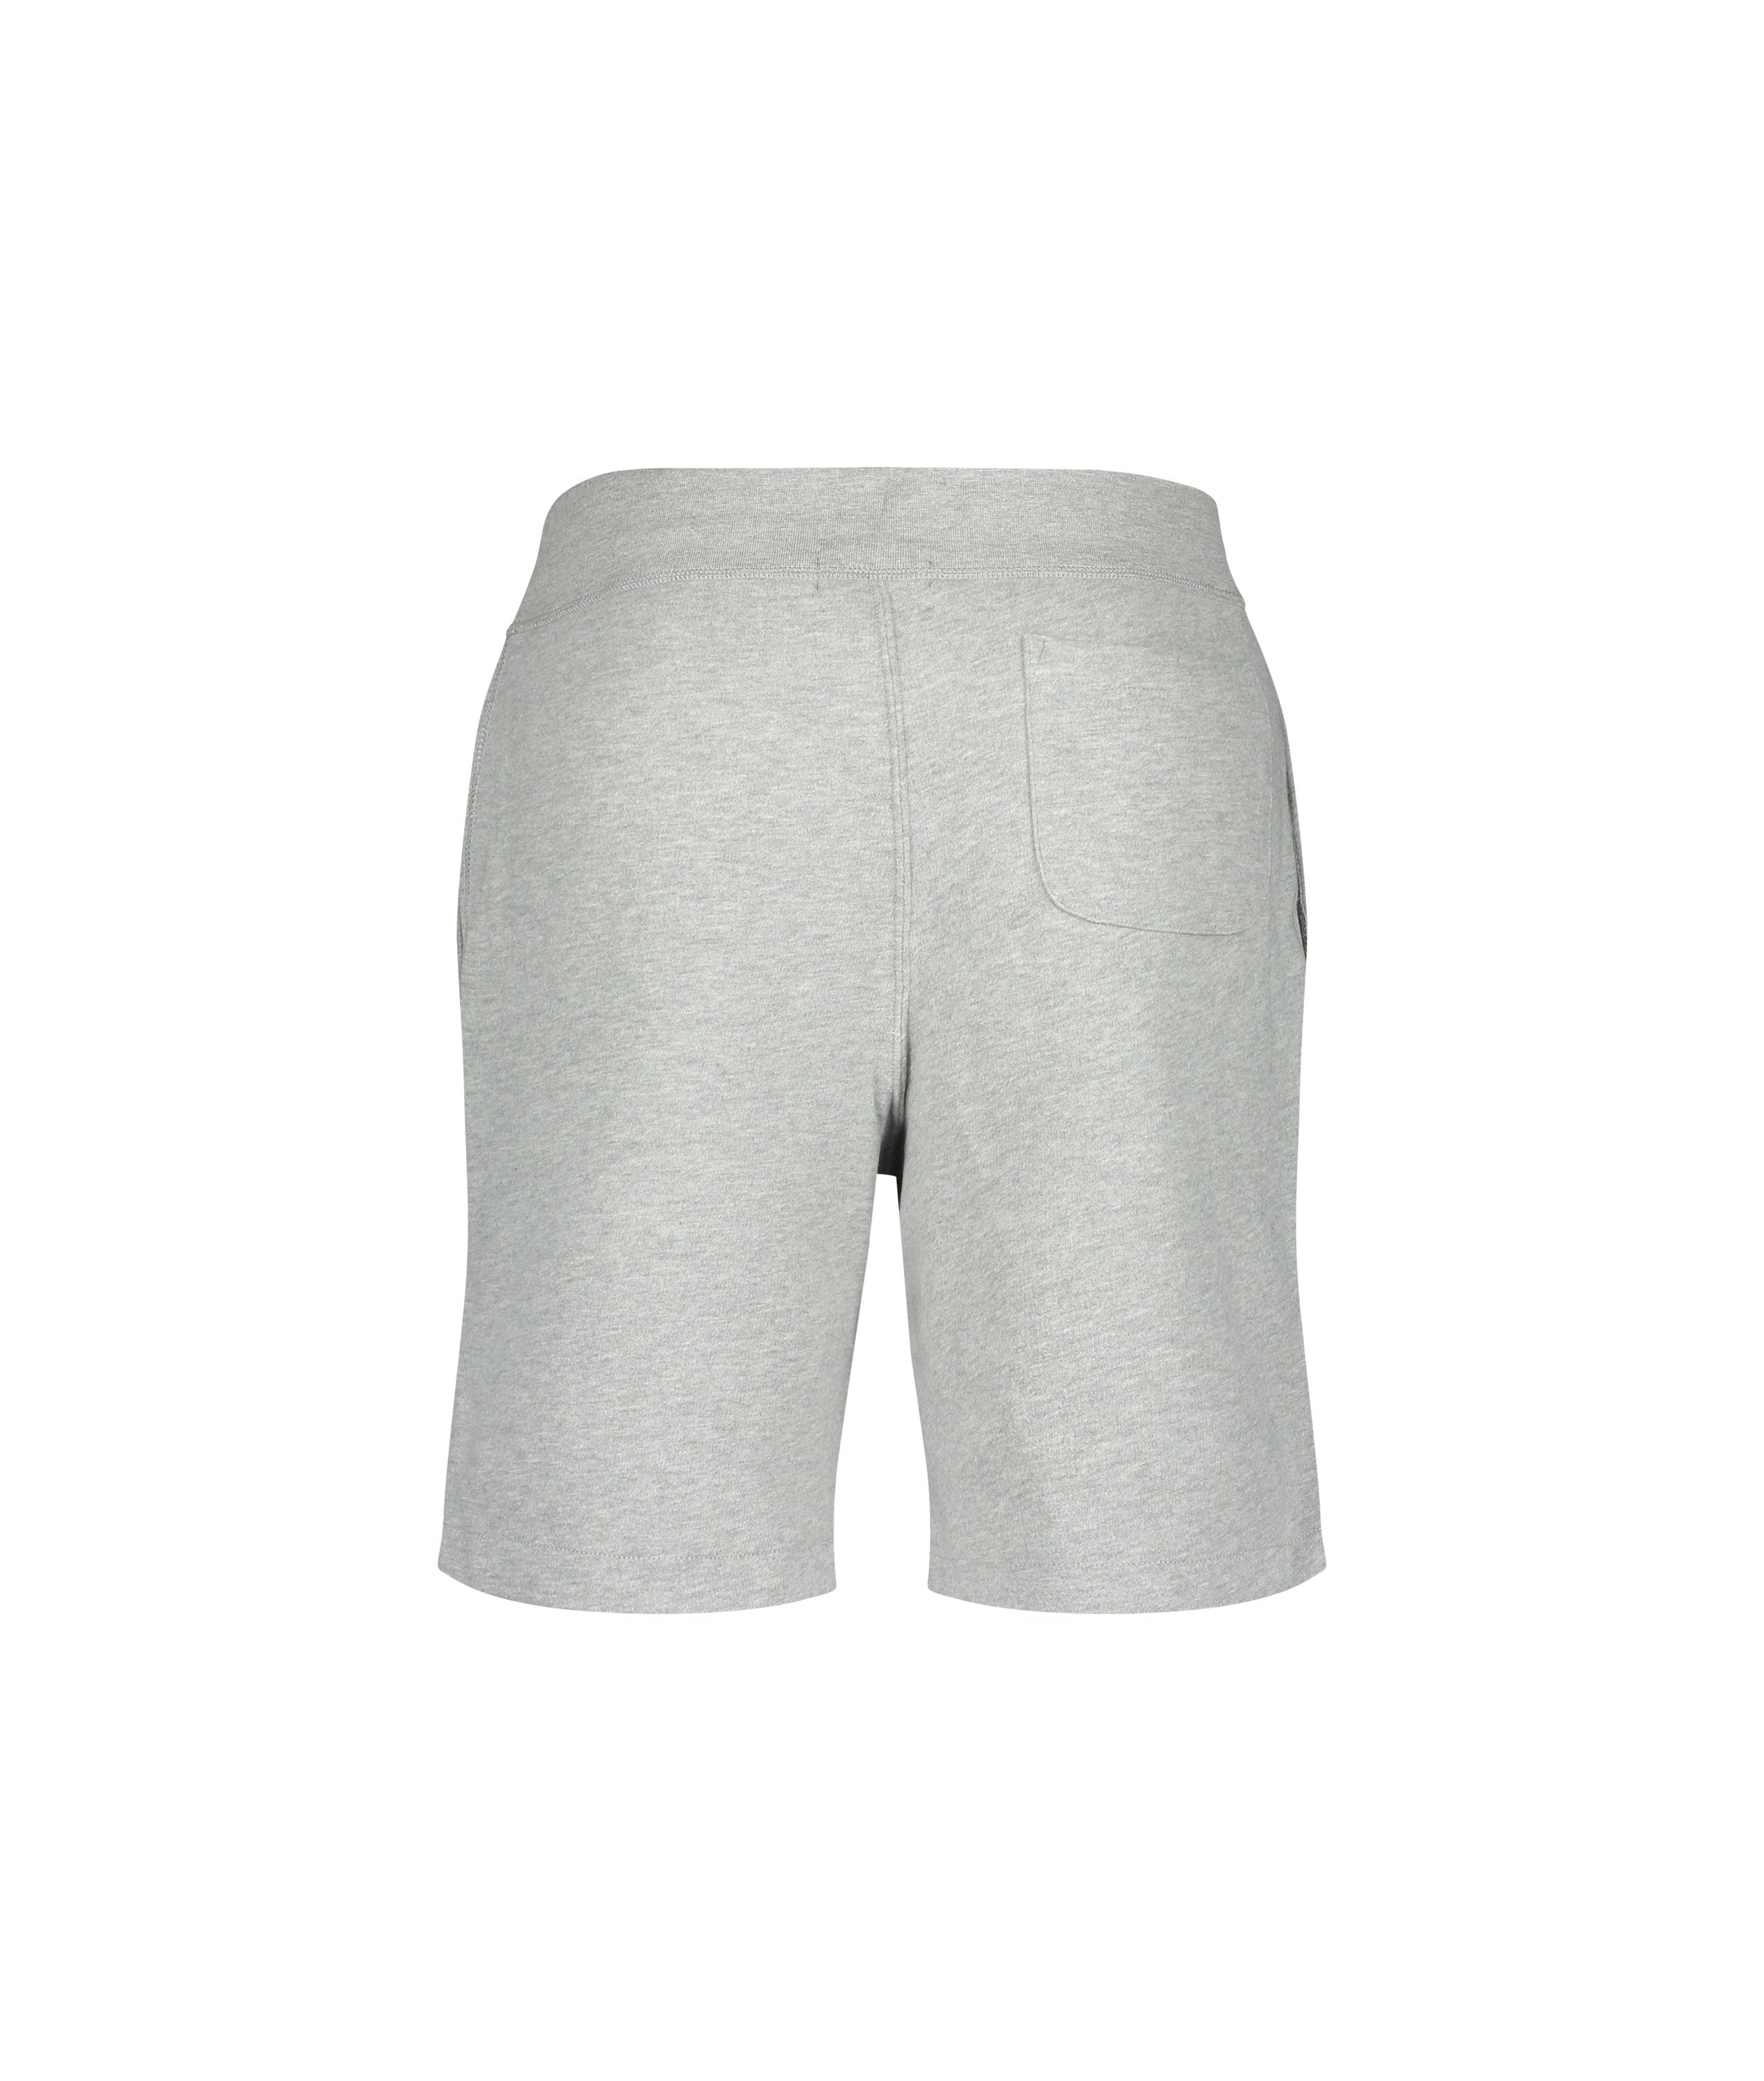 RL Fleece Athletic Jogger Shorts - Grey